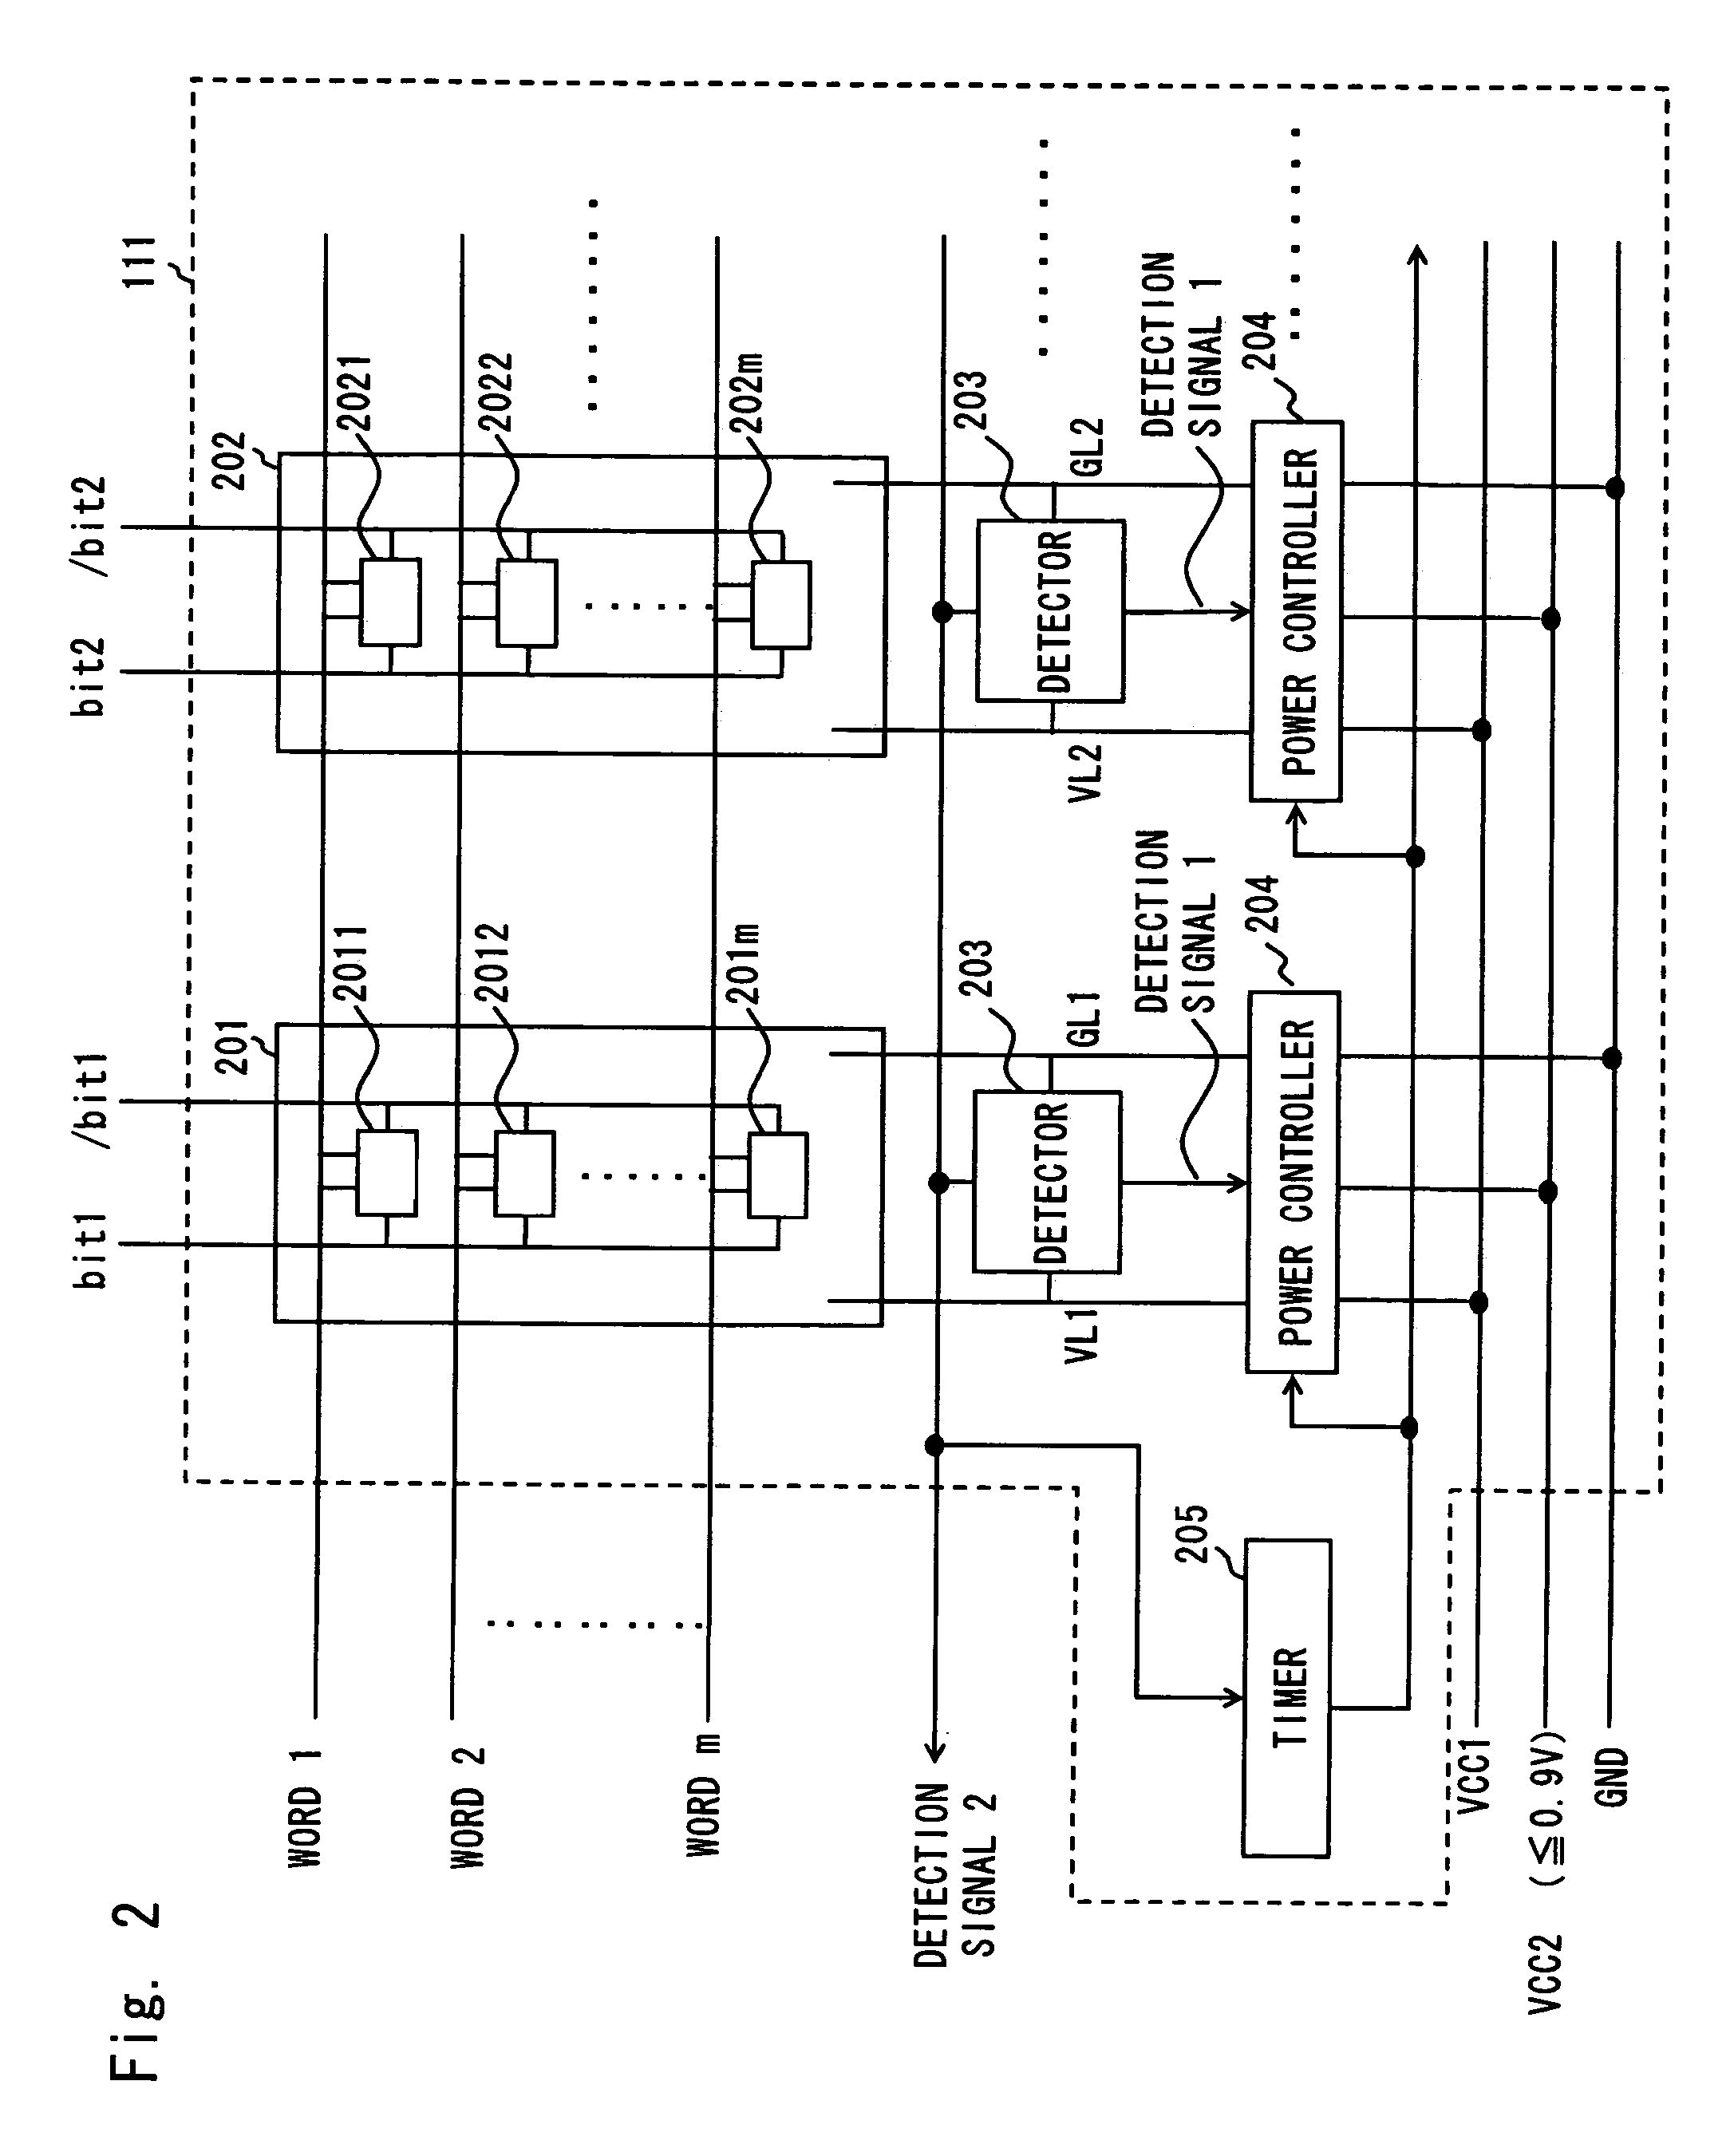 Integrated circuit apparatus